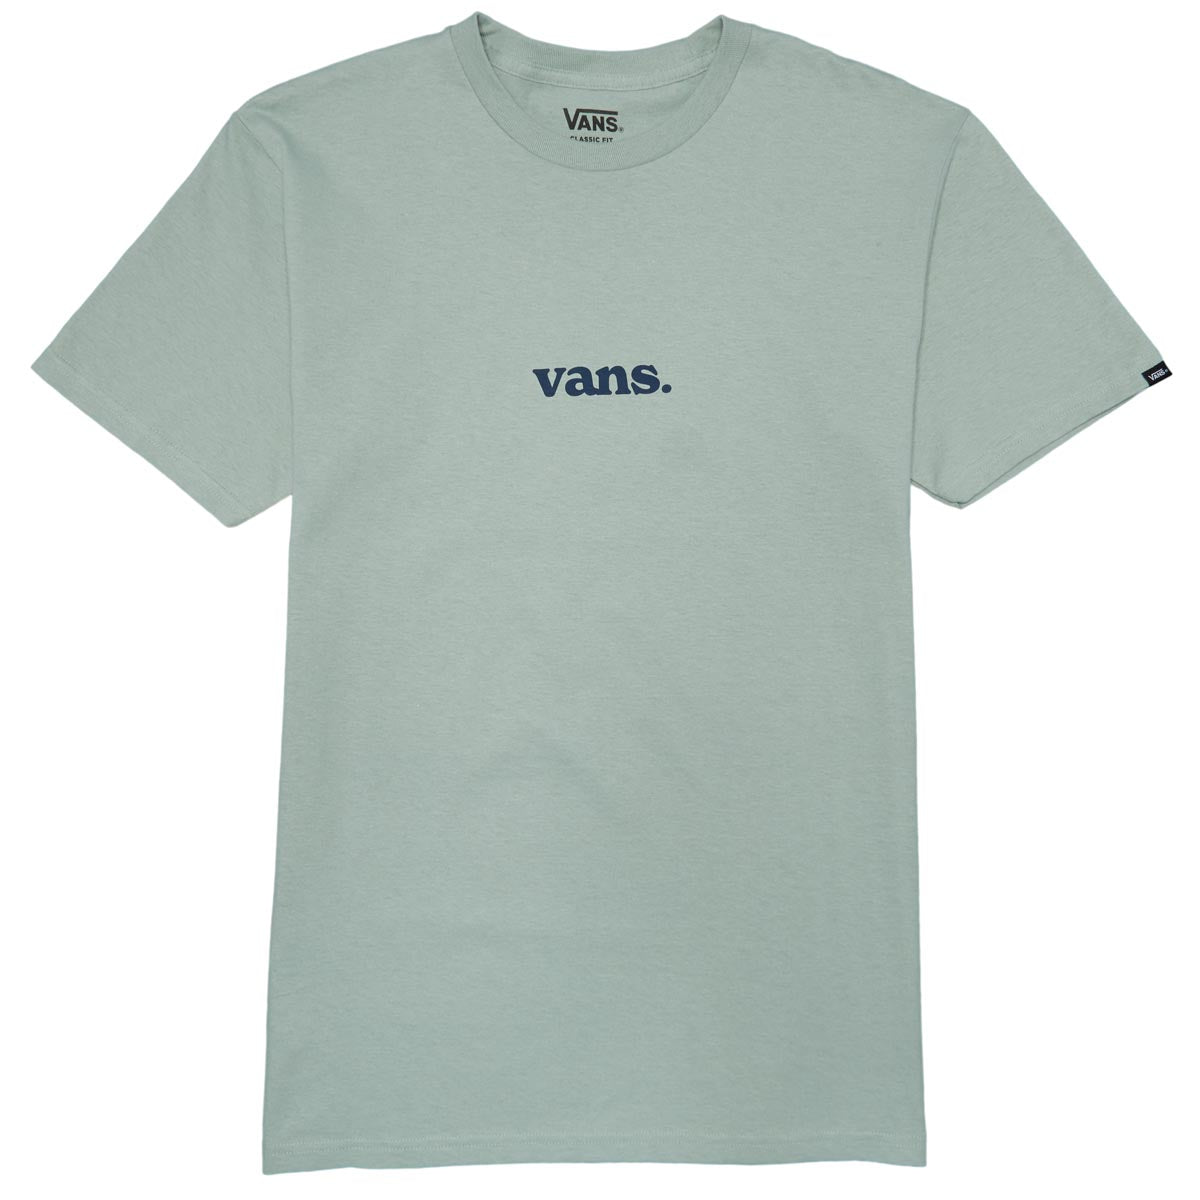 Vans Lower Corecase T-Shirt - Iceberg Green/dress Blues image 1